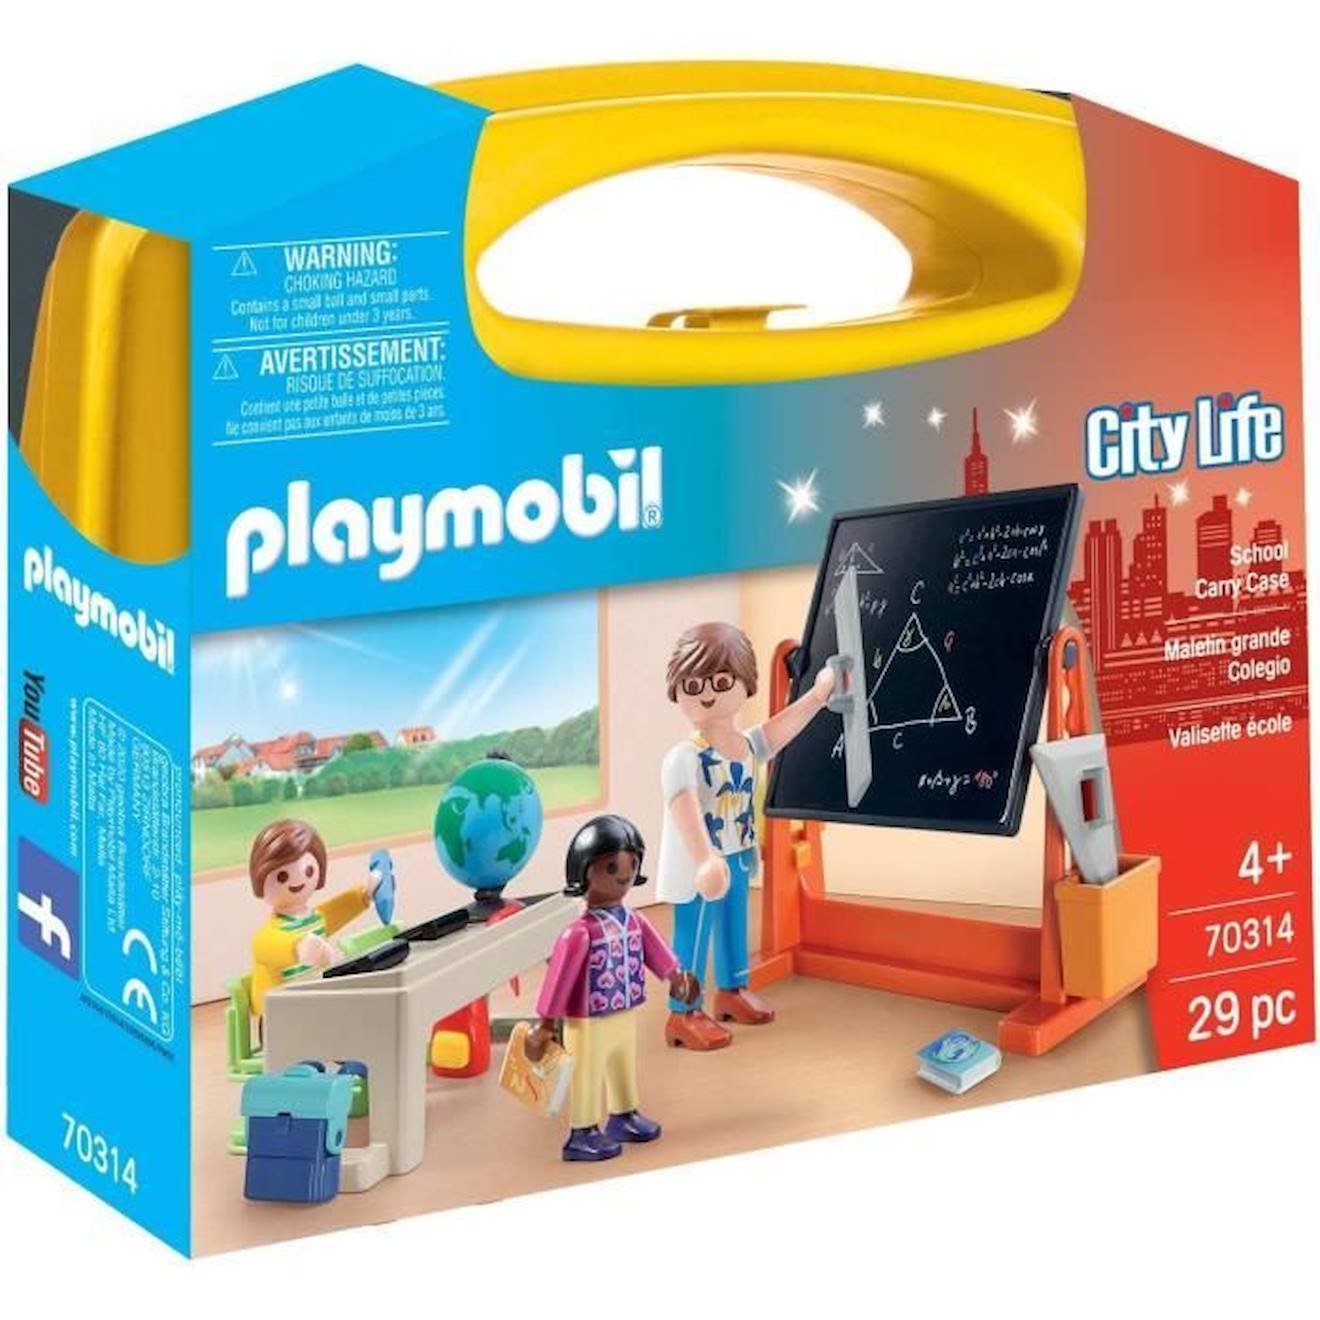 Playmobil - 70314 - Valisette École - Enfant - Mixte - Bleu - 4 Ans - Playmobil City Life - Plastiqu